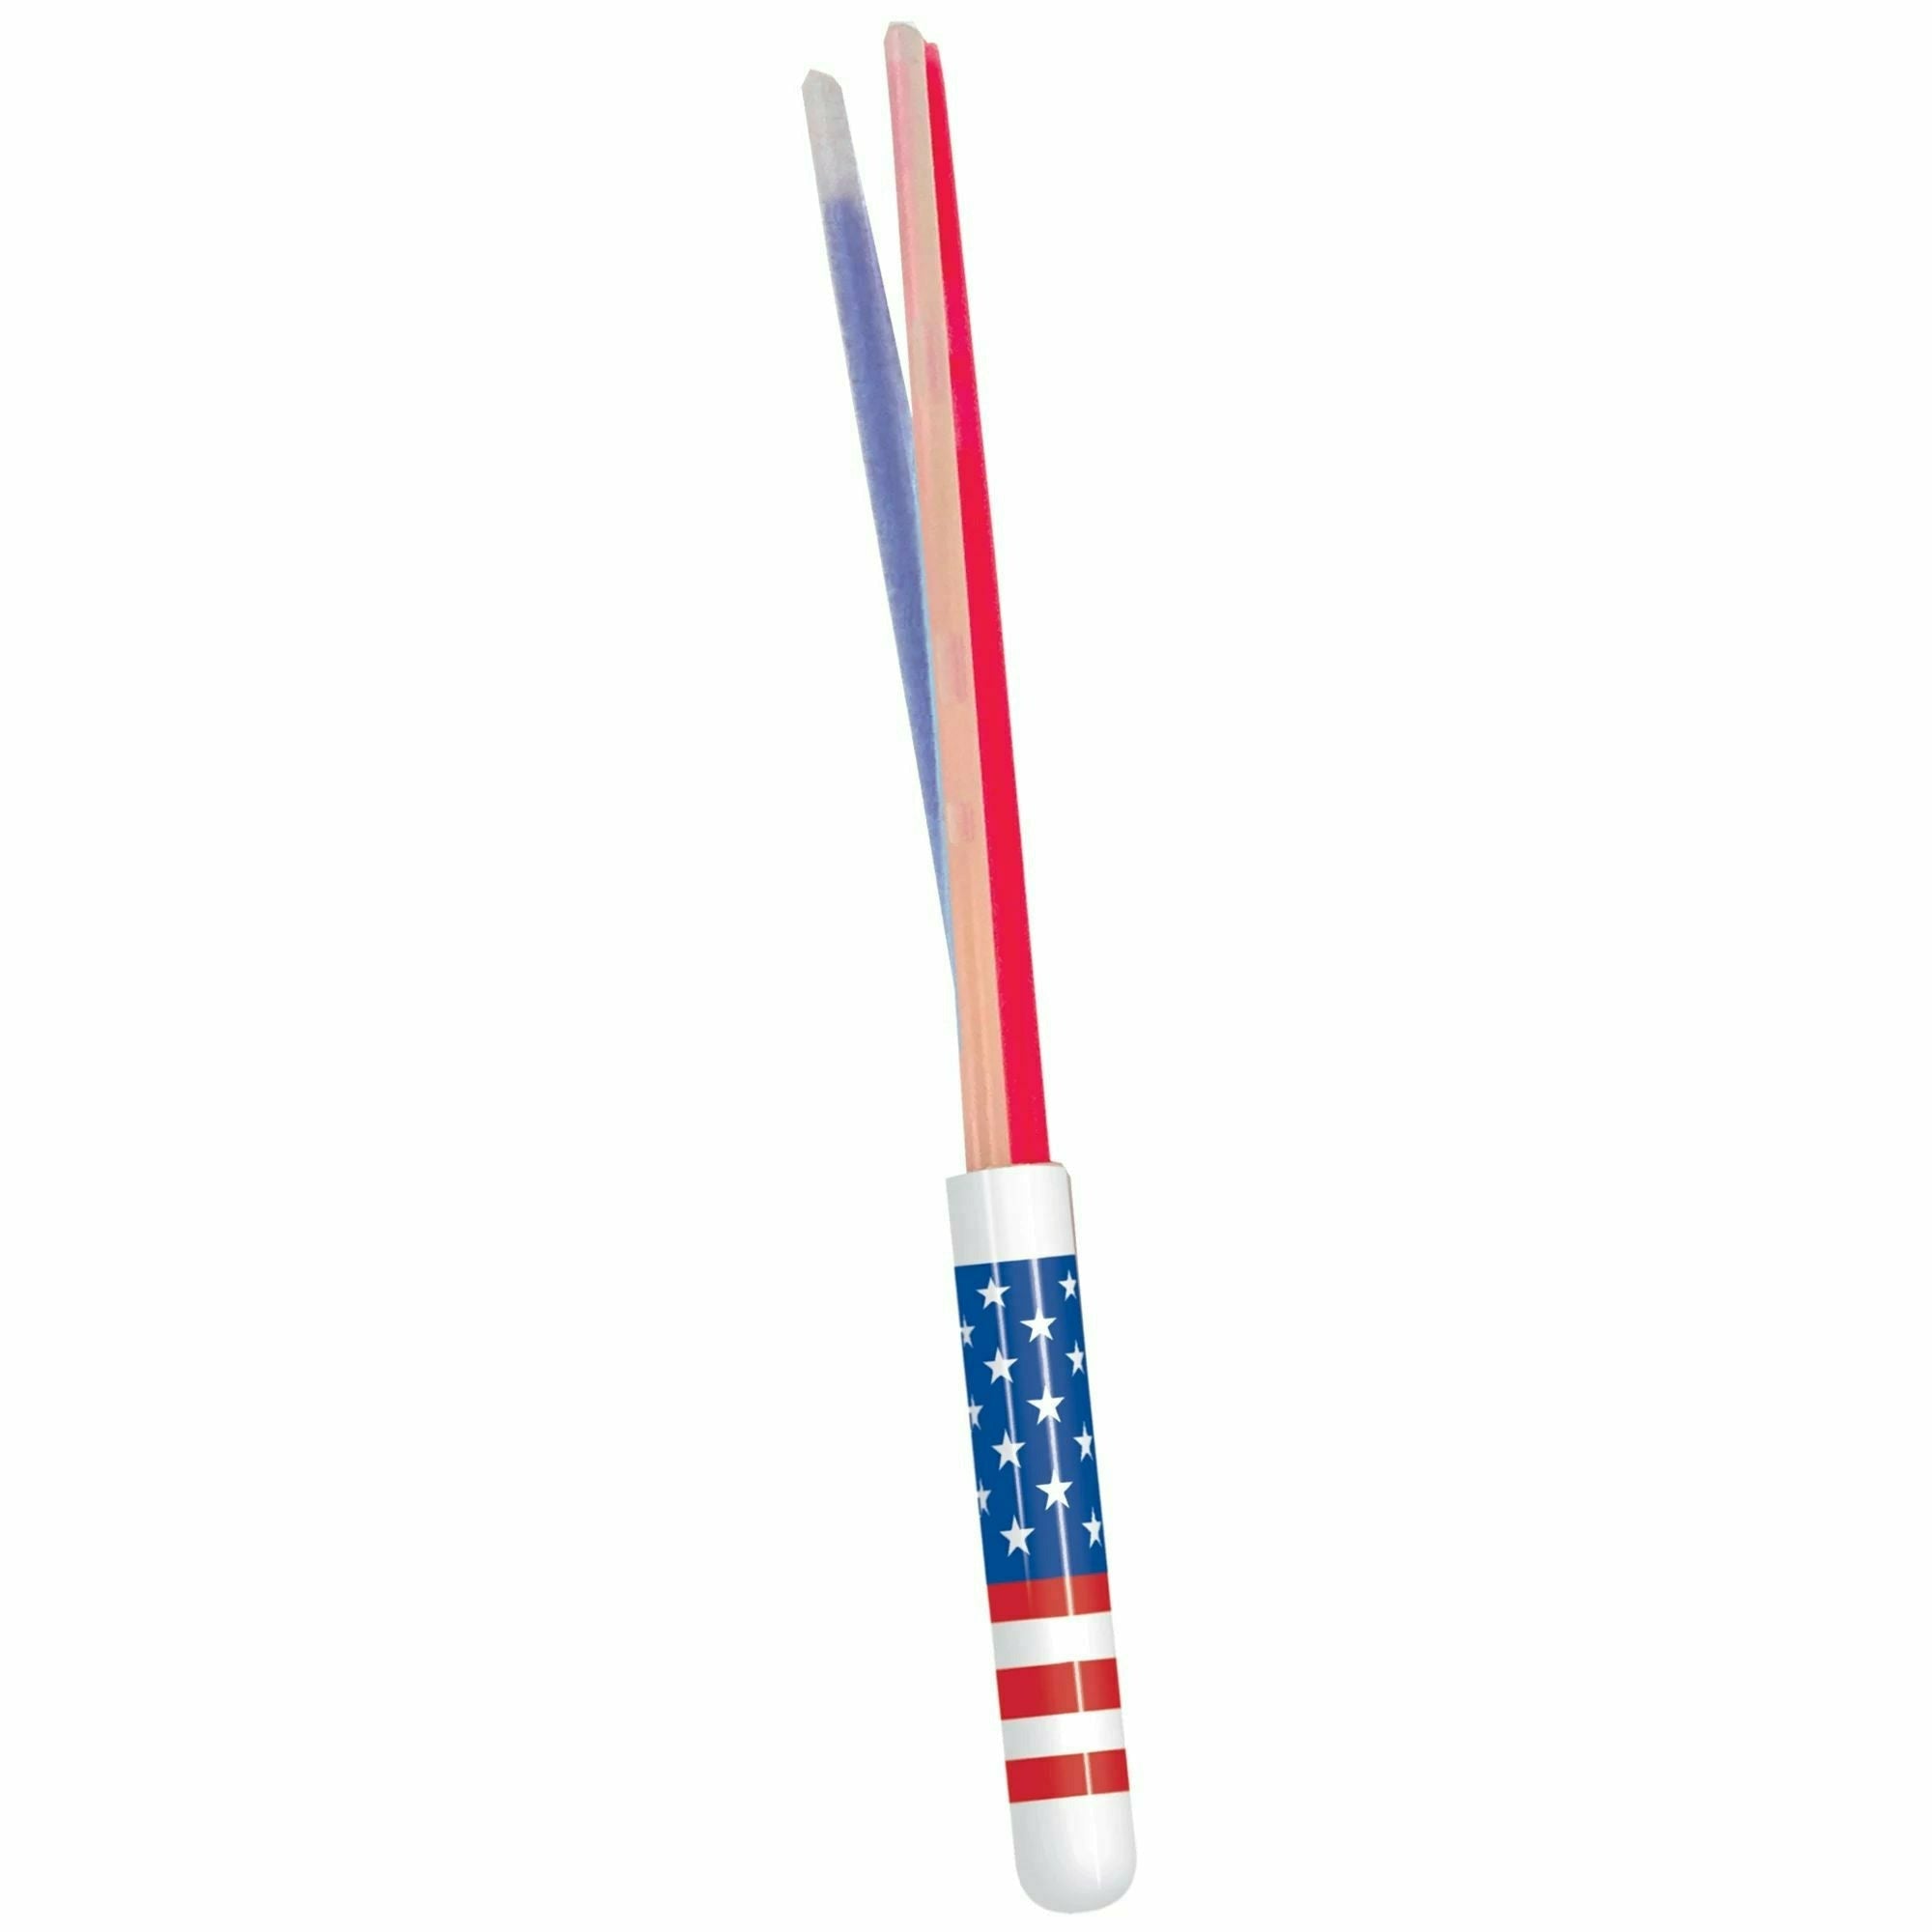 Amscan HOLIDAY: PATRIOTIC Patriotic Triple Glow Stick Wands